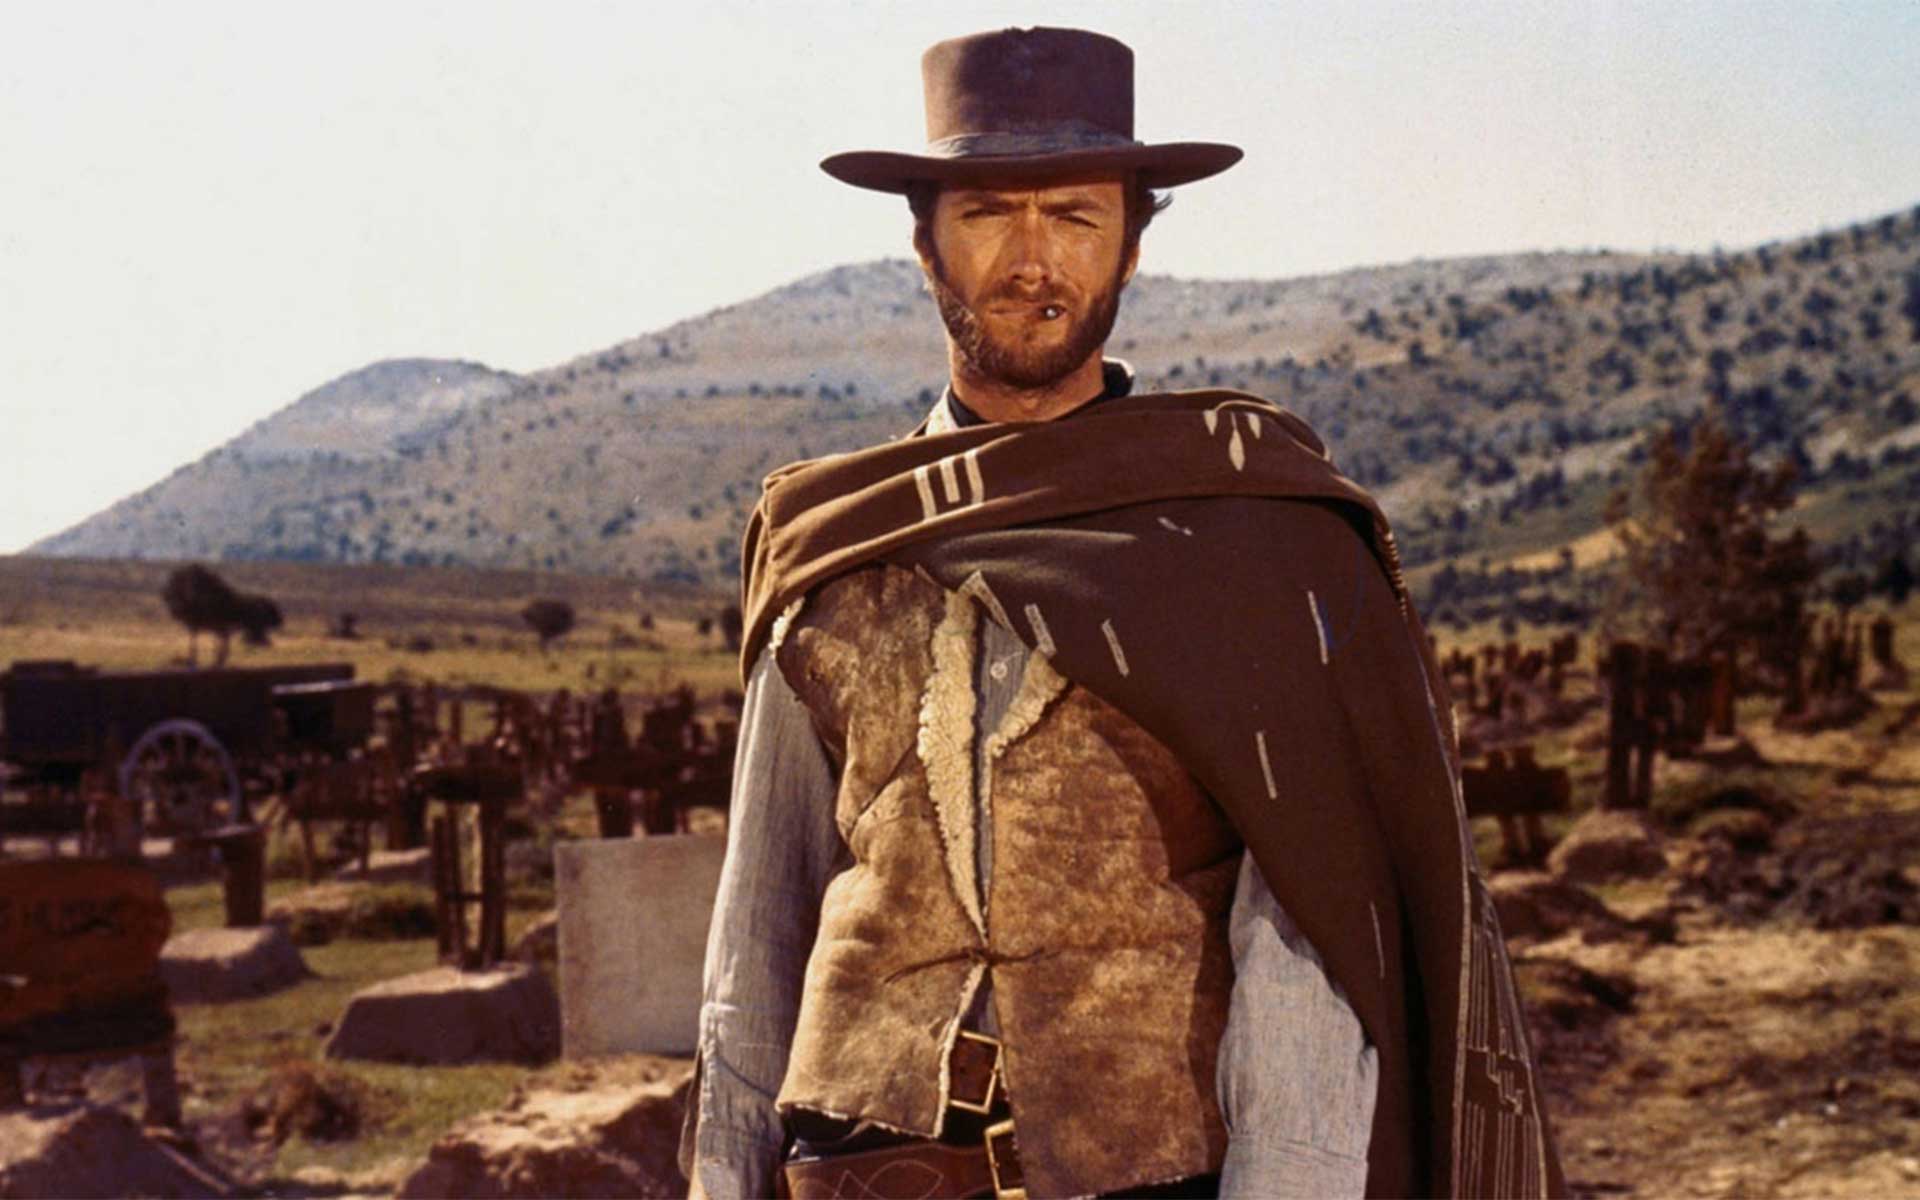 https://harrysboots.com/wp-content/uploads/2017/10/HB-blog-Clint-Eastwood.jpg